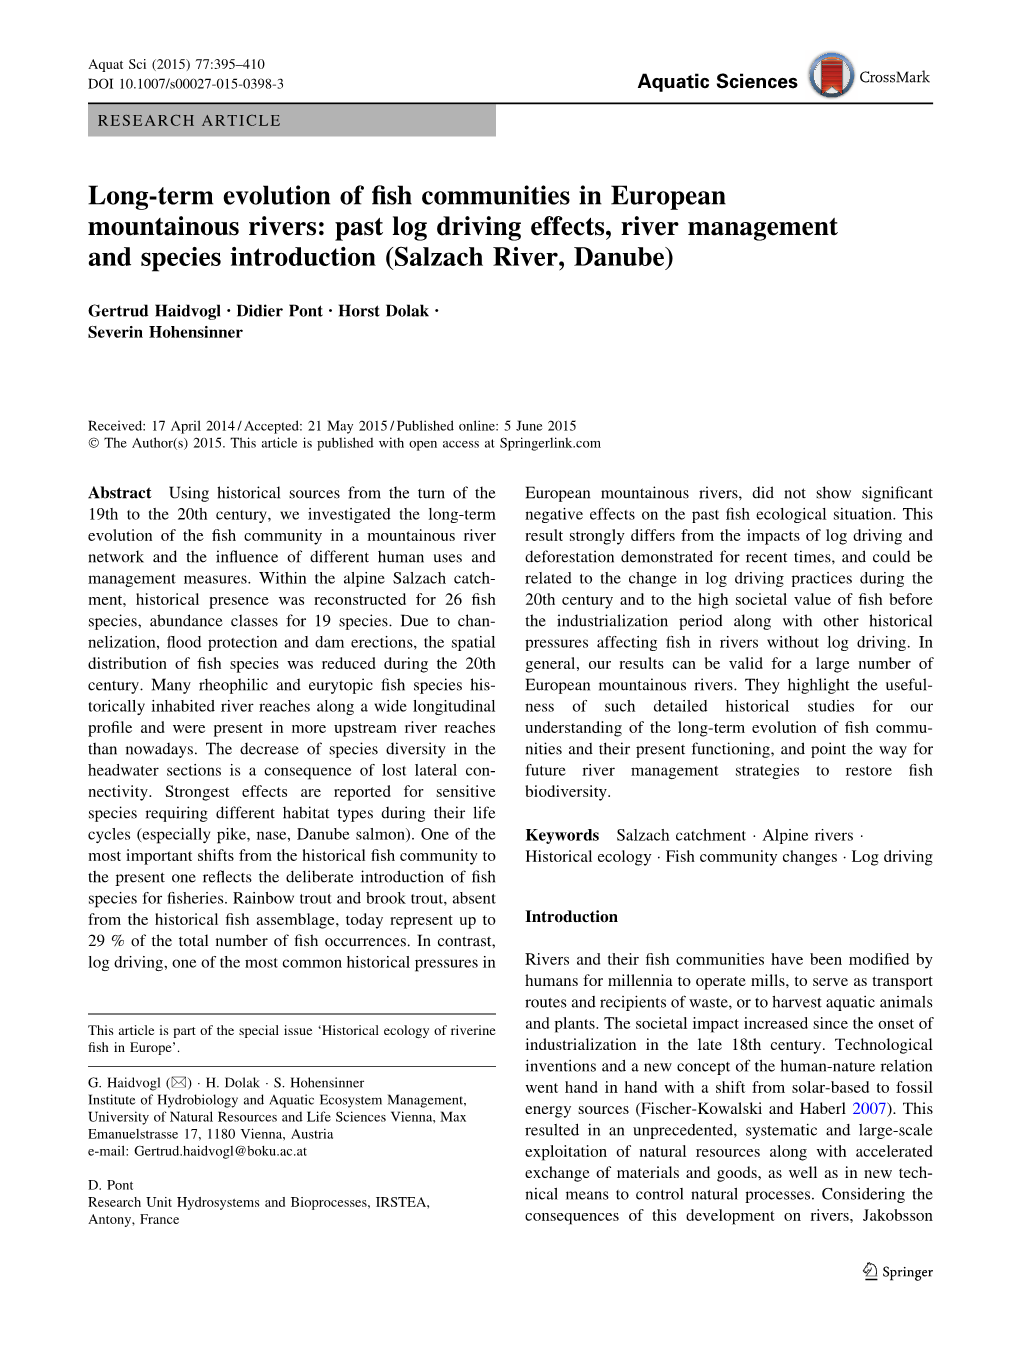 Long-Term Evolution of Fish Communities in European